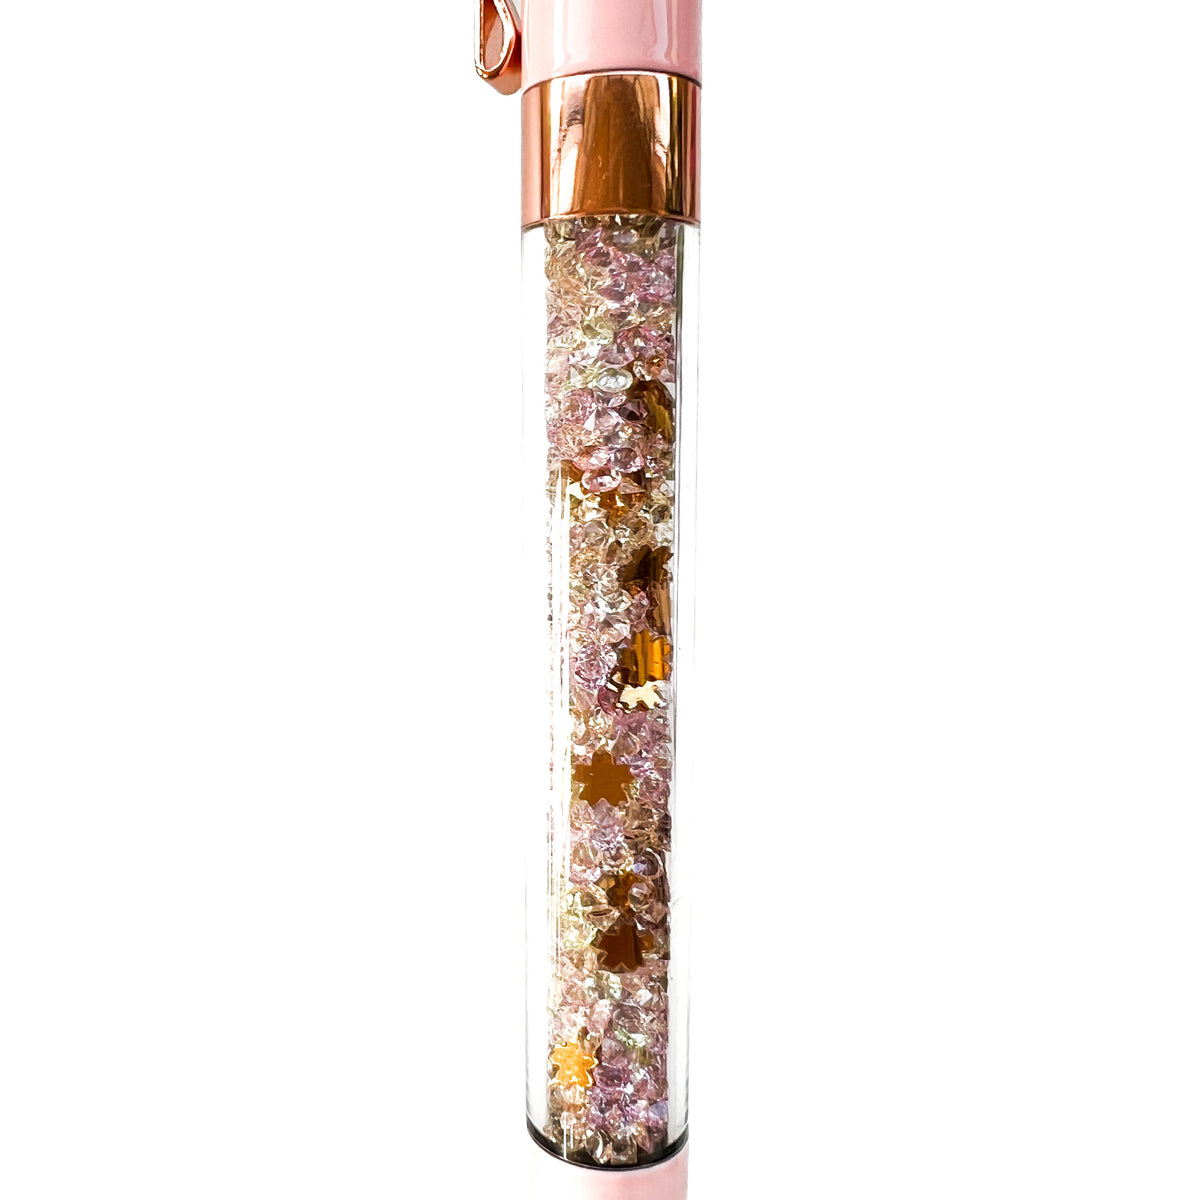 Sakura Picnic Crystal VBPen | limited kit pen